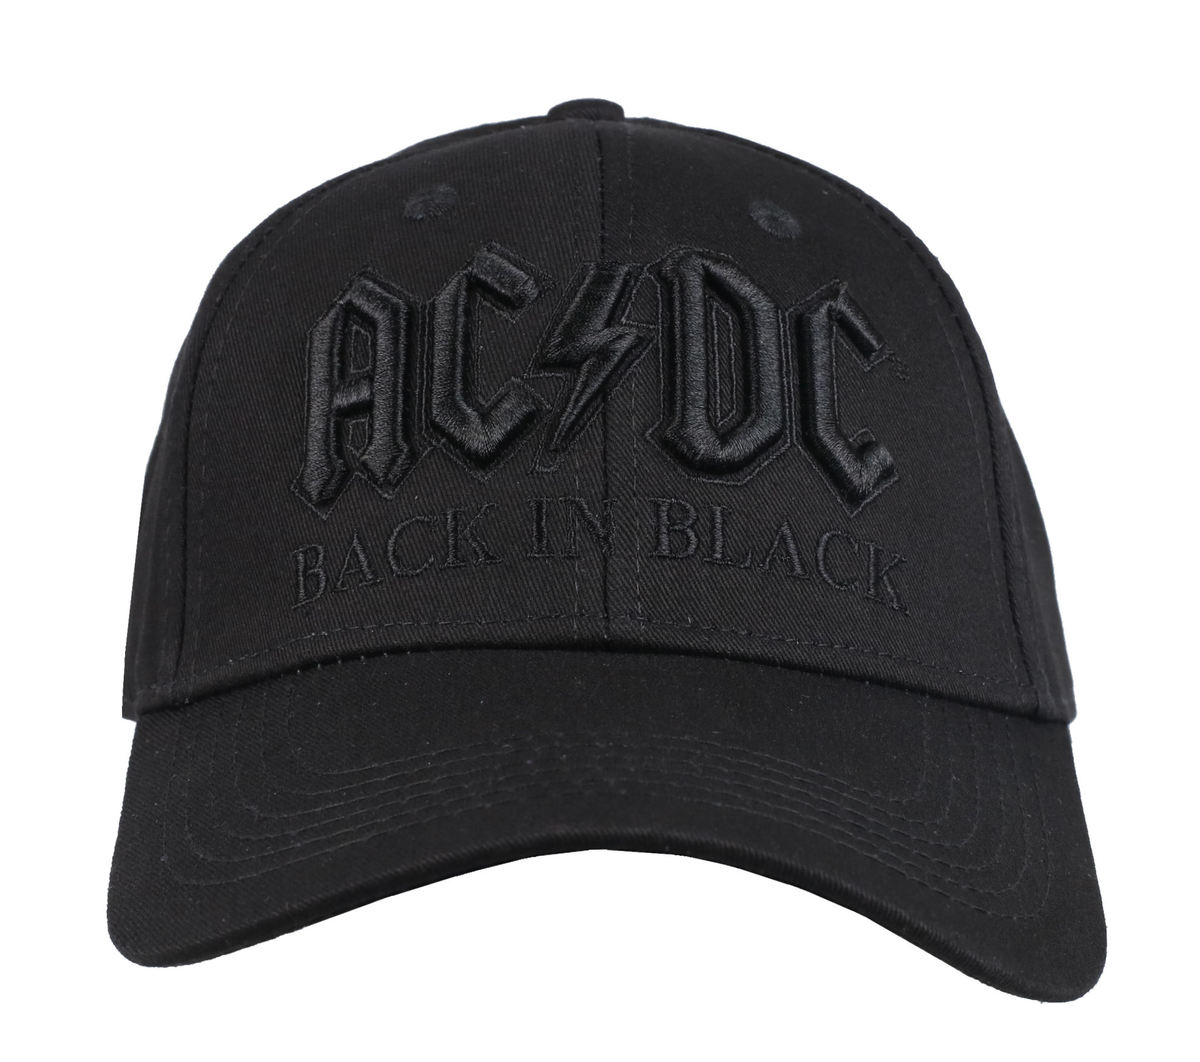 AC/DC - Back in Black cepure